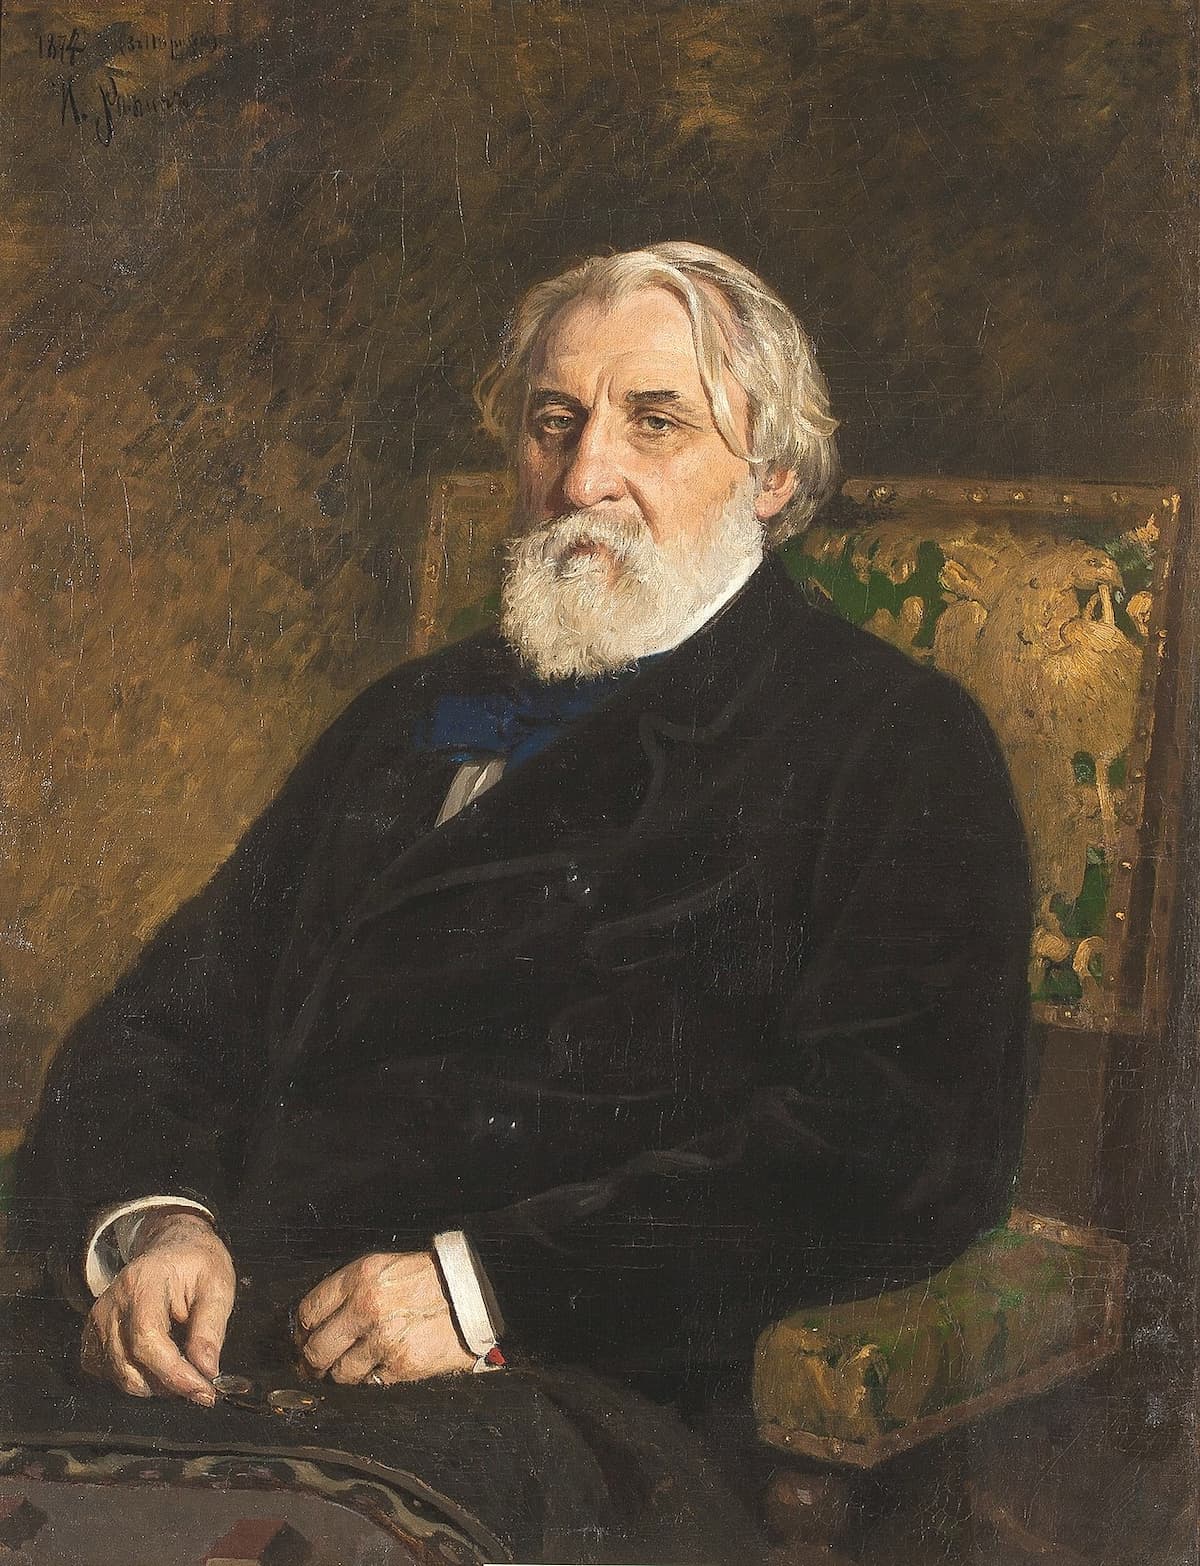 Turgenev, depicted by Ilya Repin (1874)